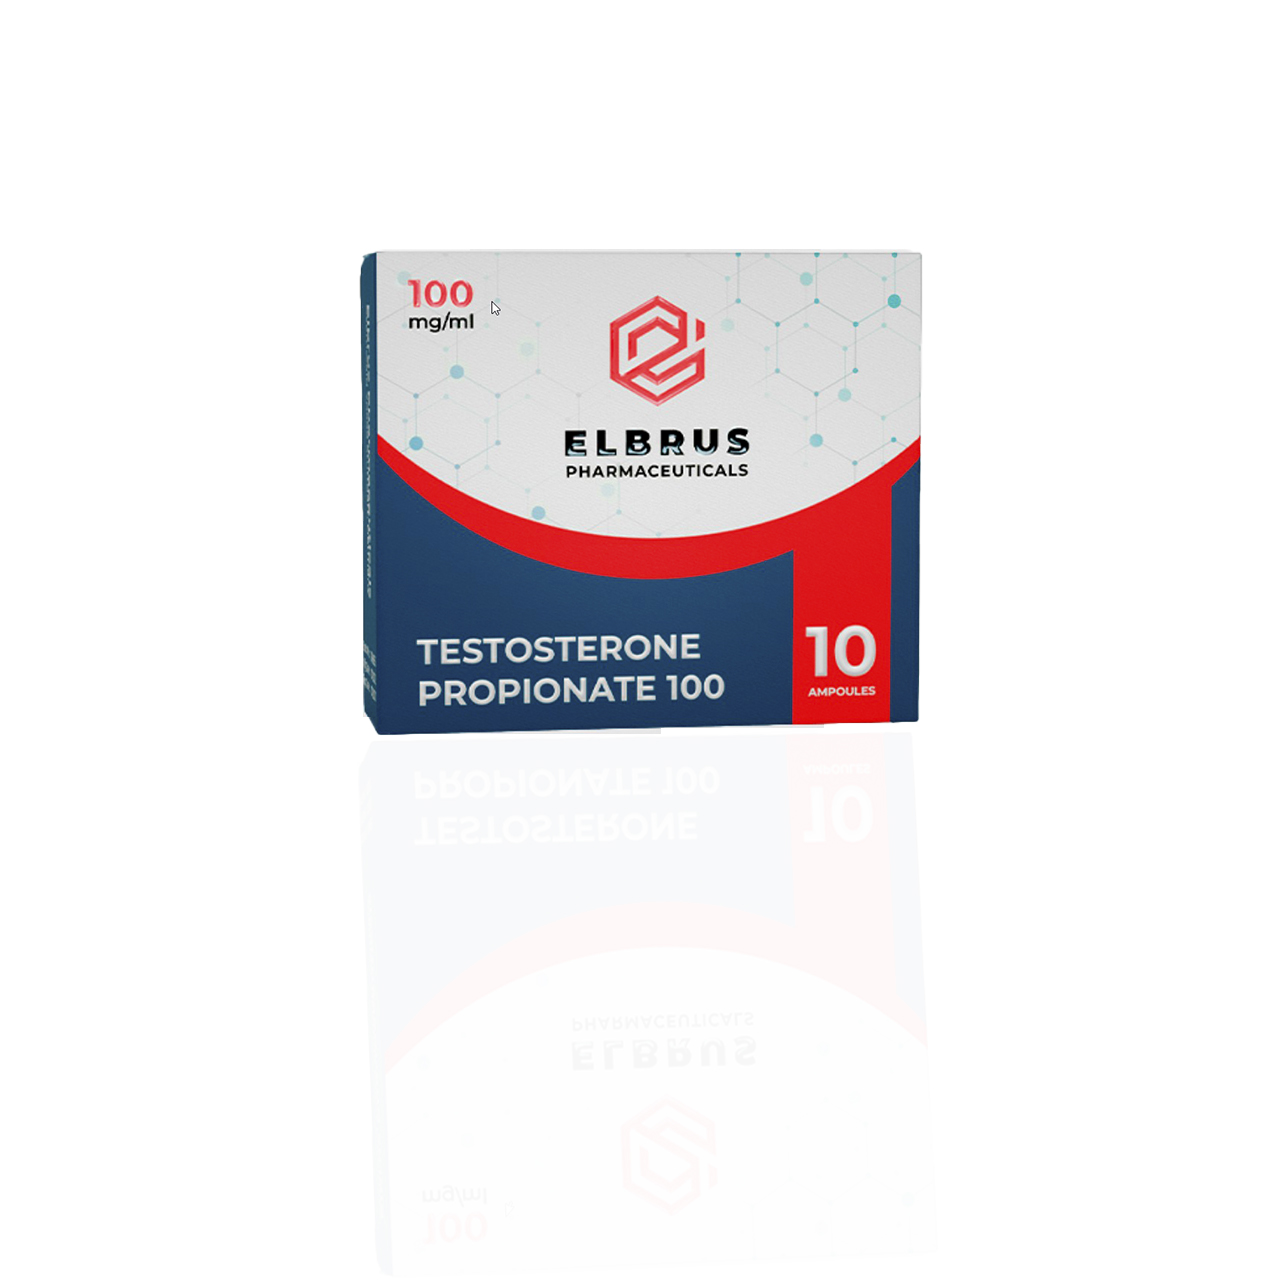 Testosterone Propionate 100 mg Elbrus Pharmaceuticals Iniezione di steroidi